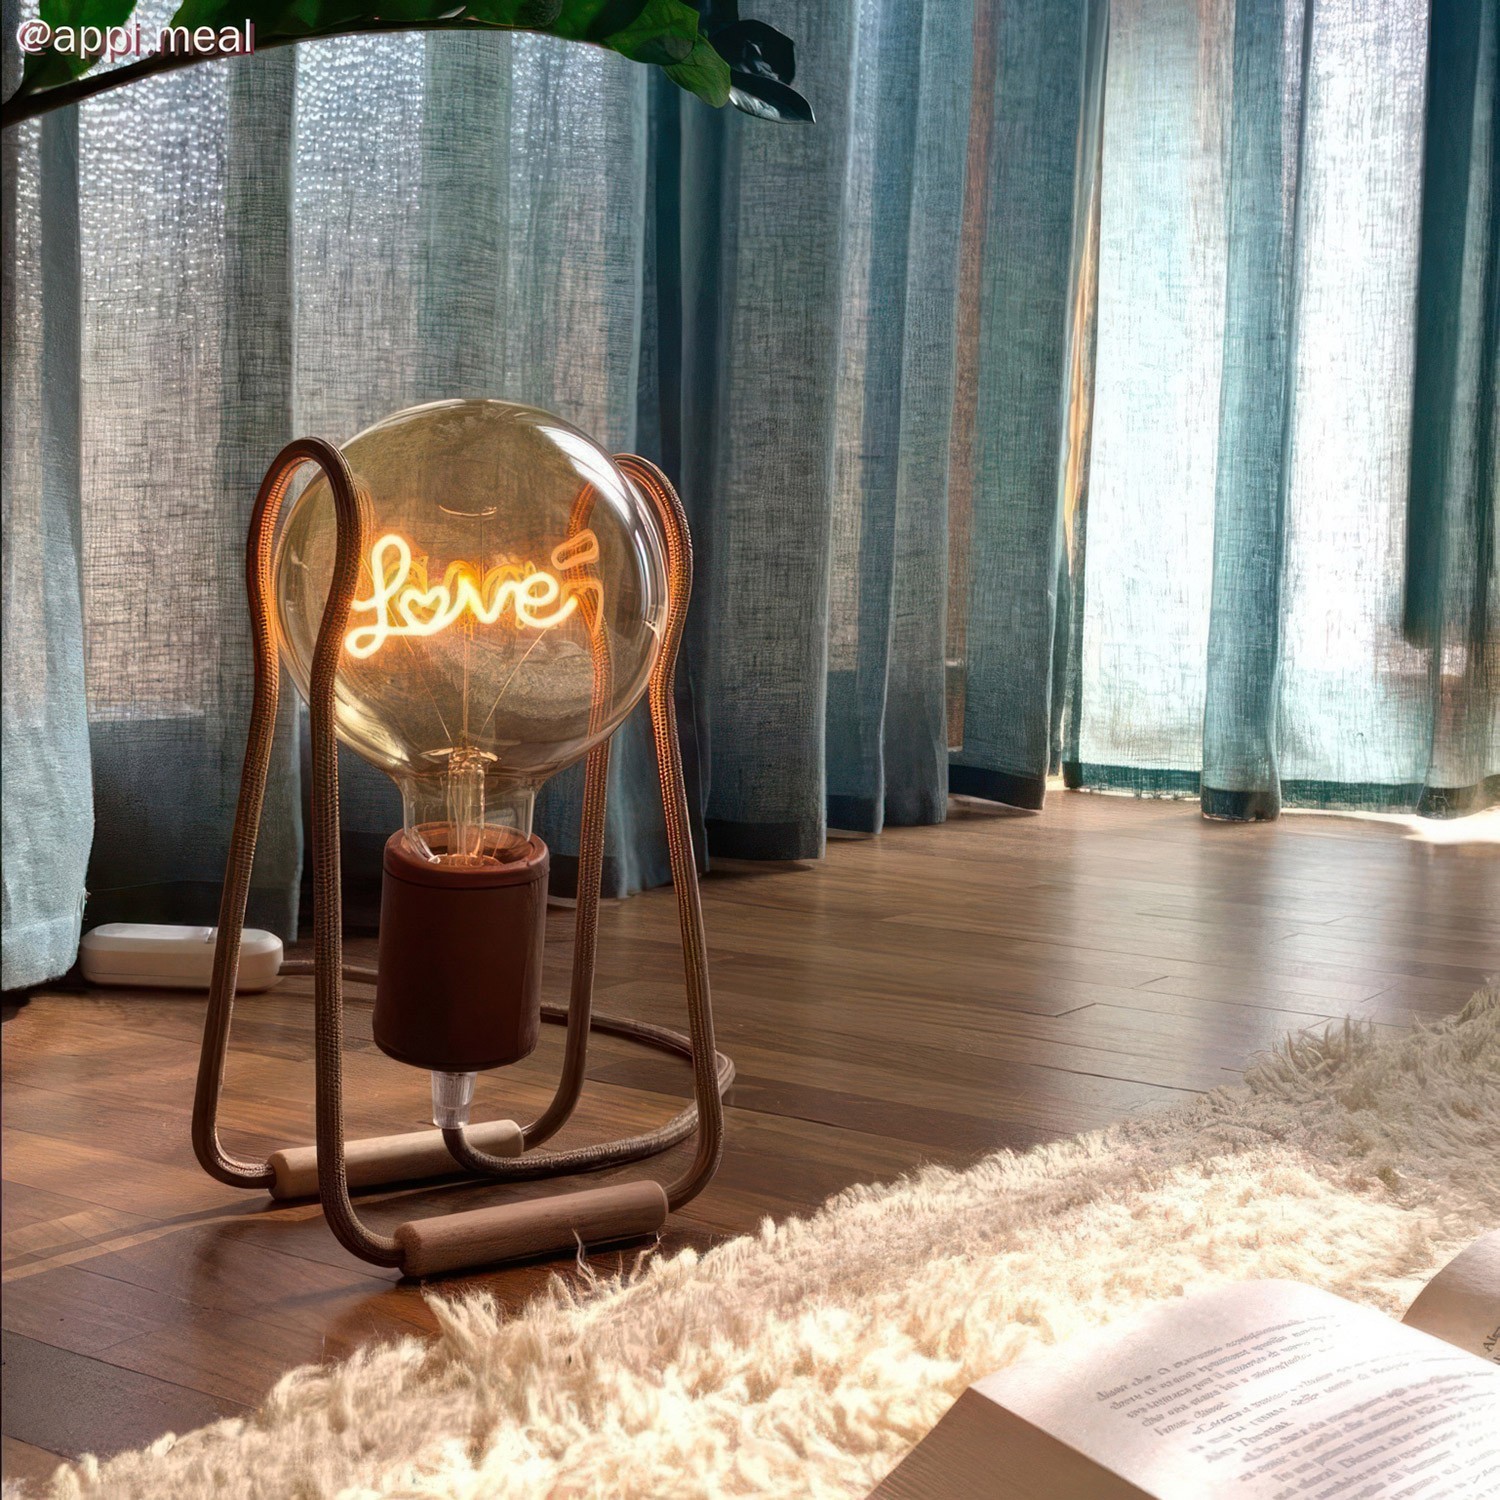 Bombill Globo G125 LED Dorada para lámparas de mesa - Filamento palabra "Love" - LCOLOVE